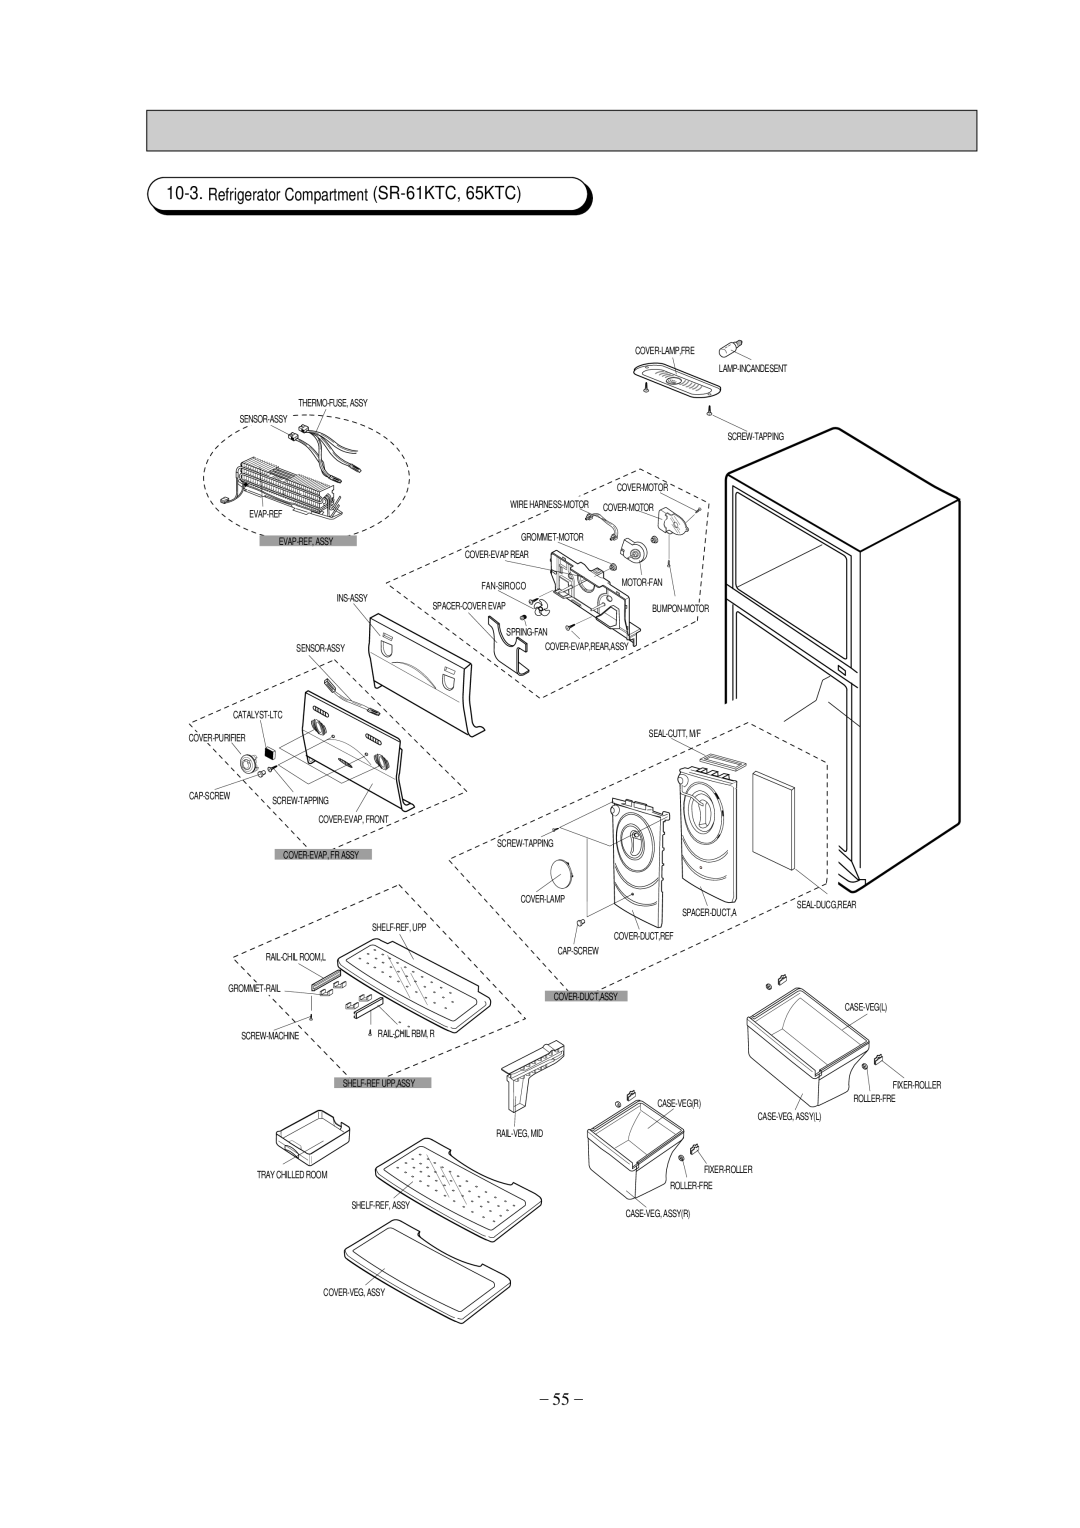 Samsung SR-65NMC, SR-65KTC, SR-69NMC, SR-61NMC specifications Refrigerator Compartment SR-61KTC,65KTC, －55－ 